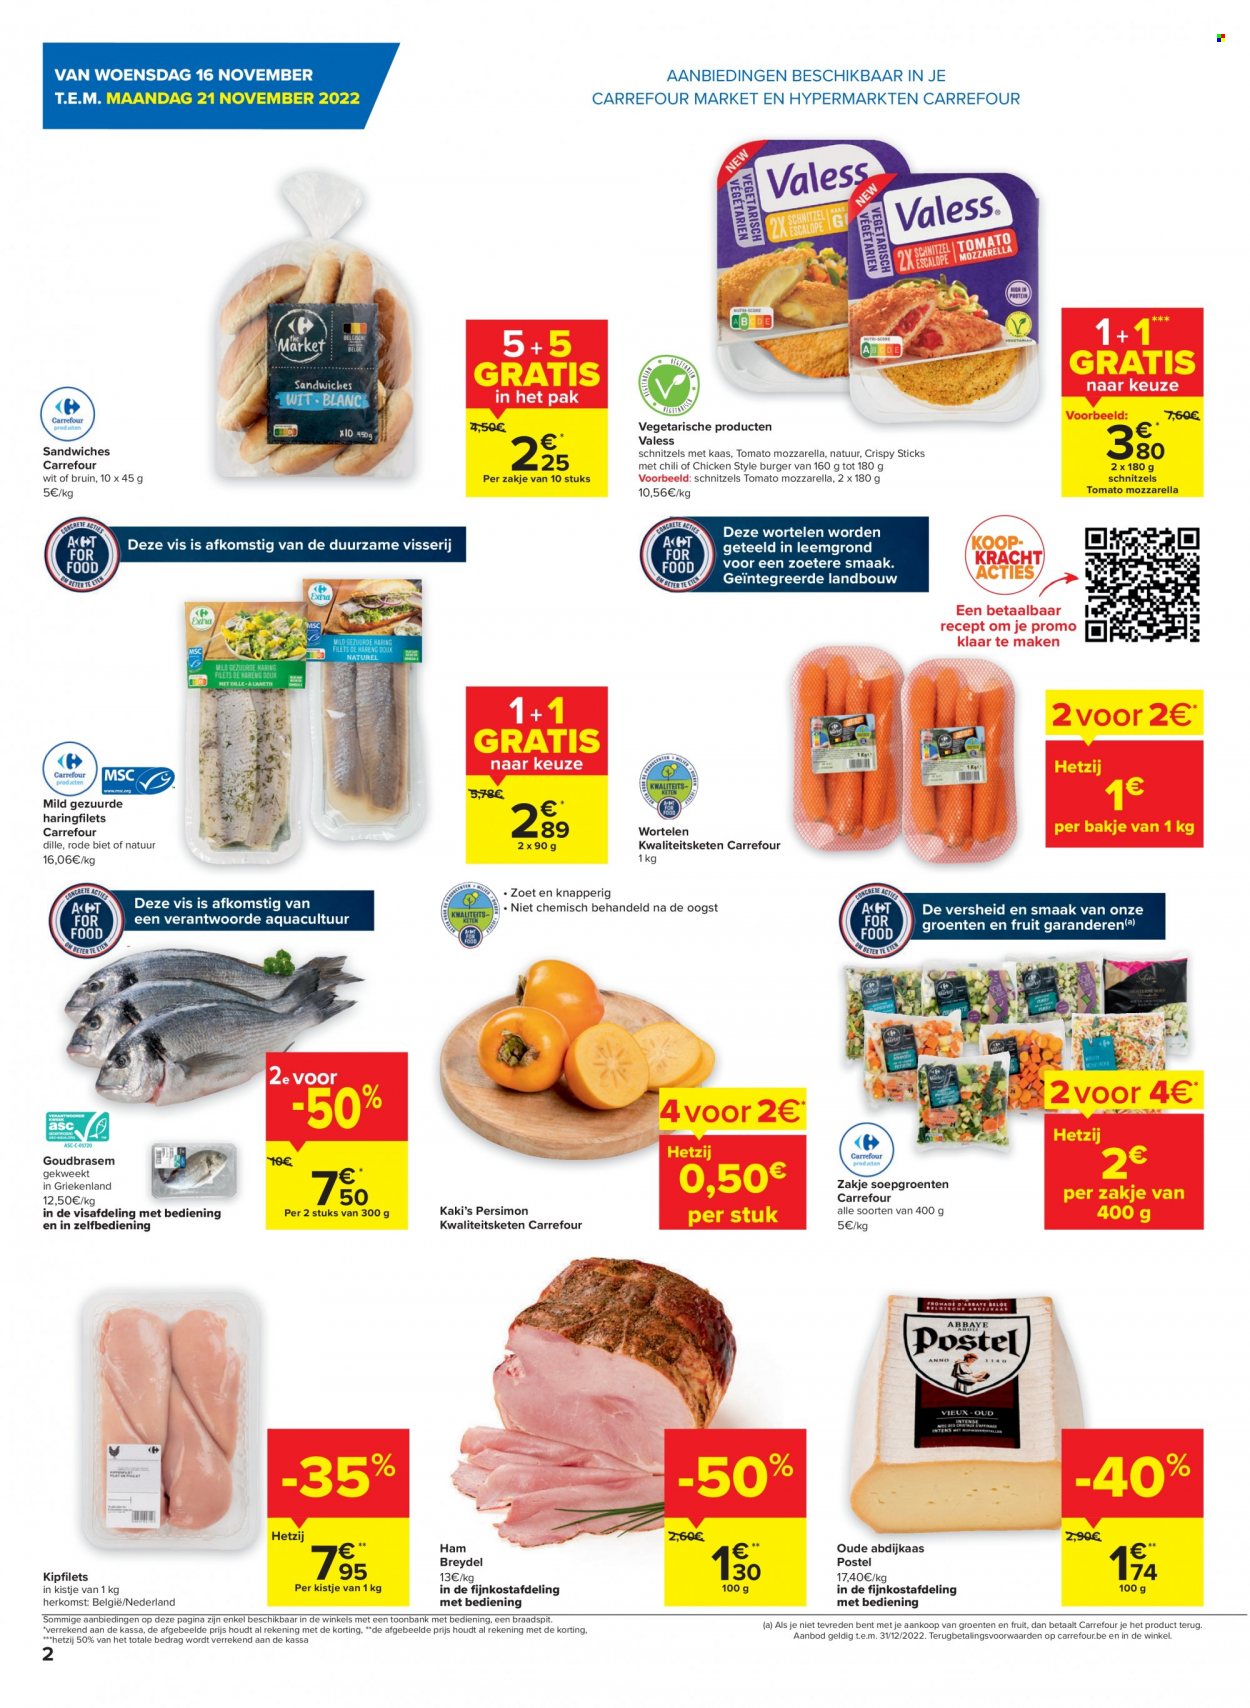 thumbnail - Carrefour-aanbieding - 16/11/2022 - 28/11/2022 -  producten in de aanbieding - biet, rode biet, soepgroenten, kaki, ham, kaas, mozzarella, dille. Pagina 2.